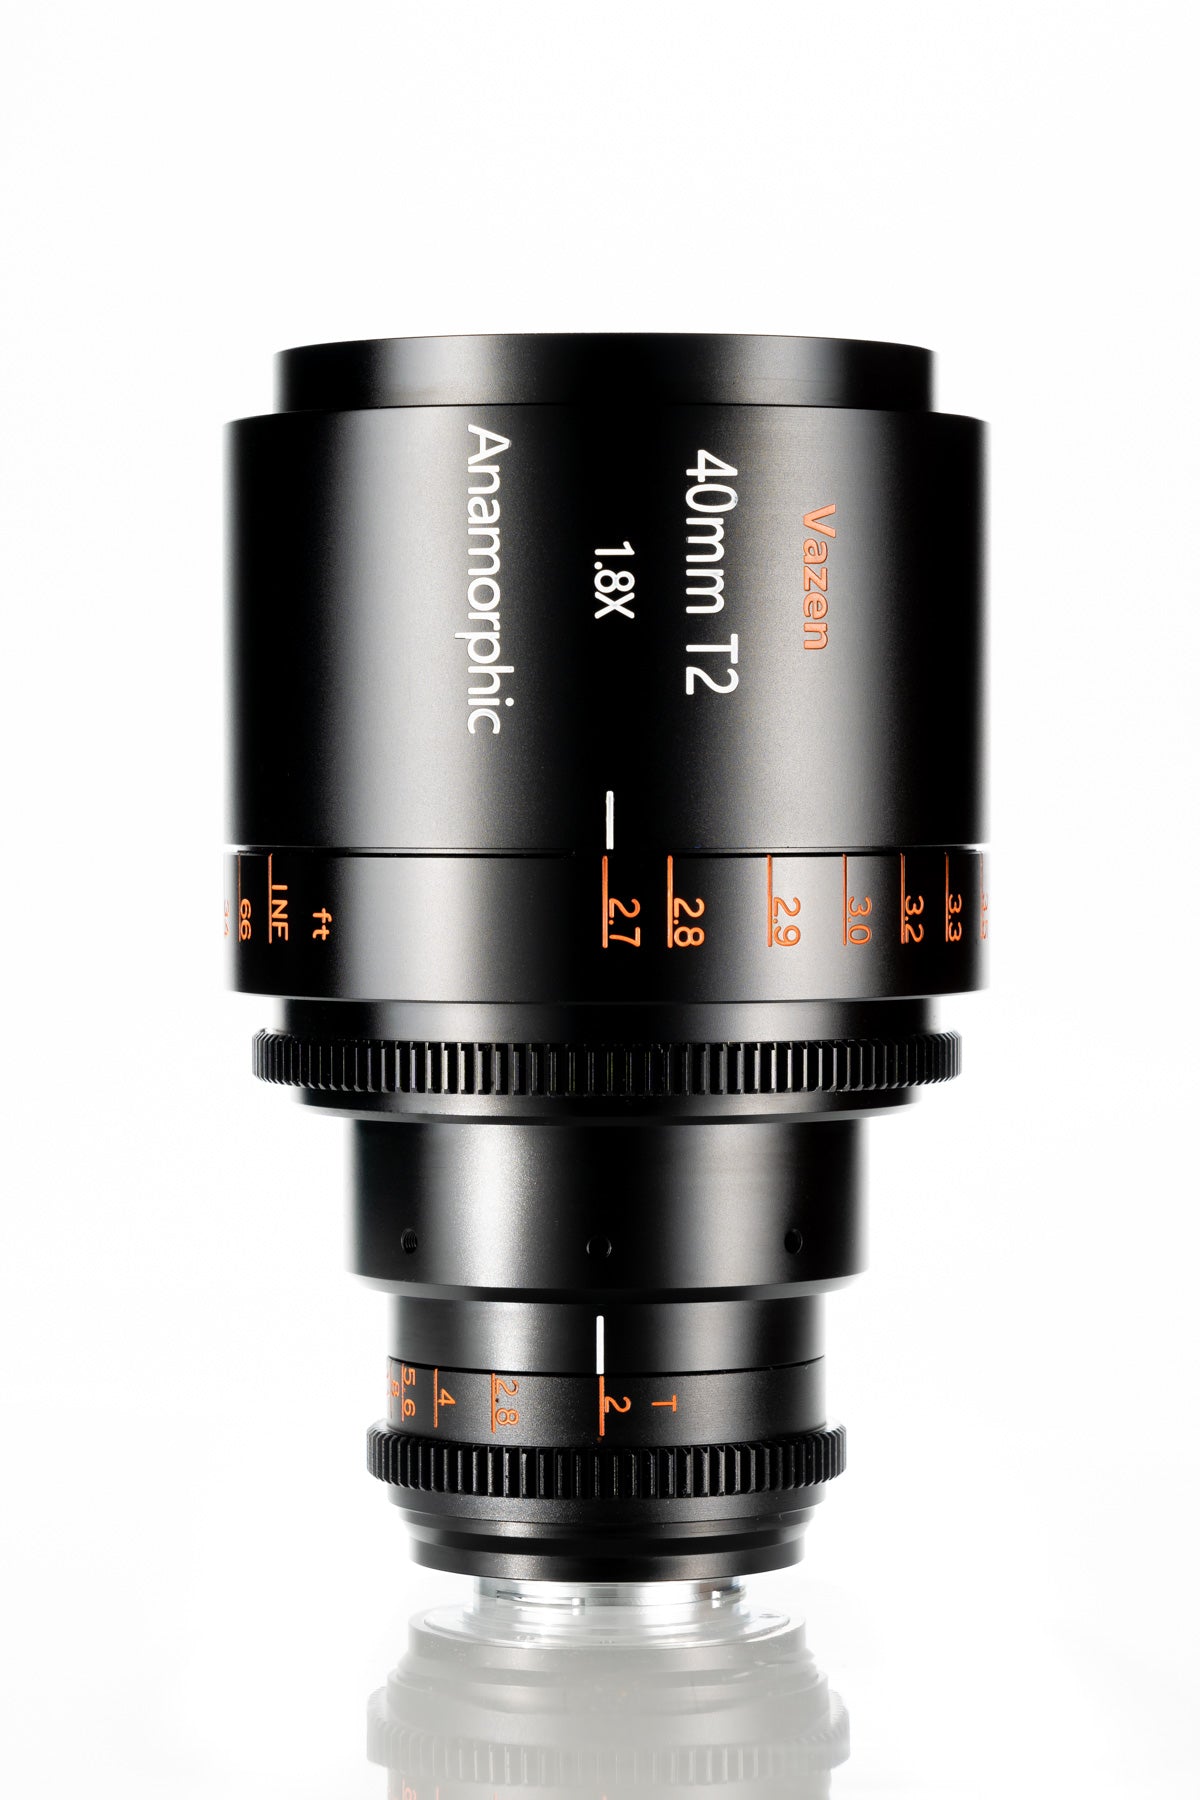 Vazen 40mm T/2 1.8X Anamorphic Lens for Canon RF Camera